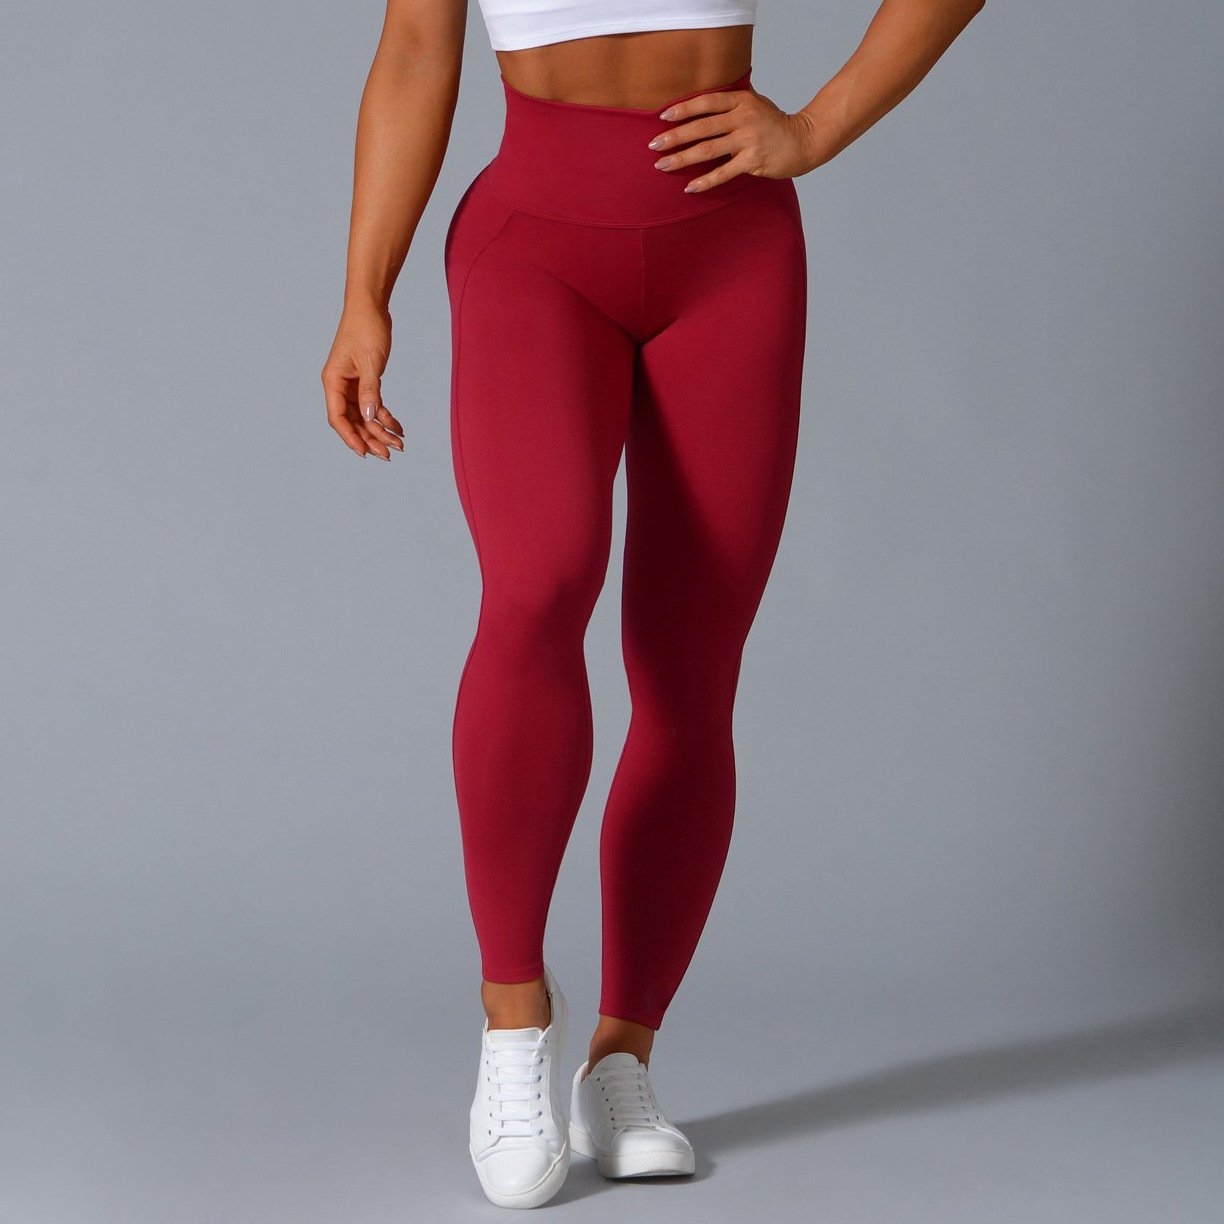 Sexy High Waist Women Running Sports Yoga Leggings-Activewear-Free Shipping at meselling99